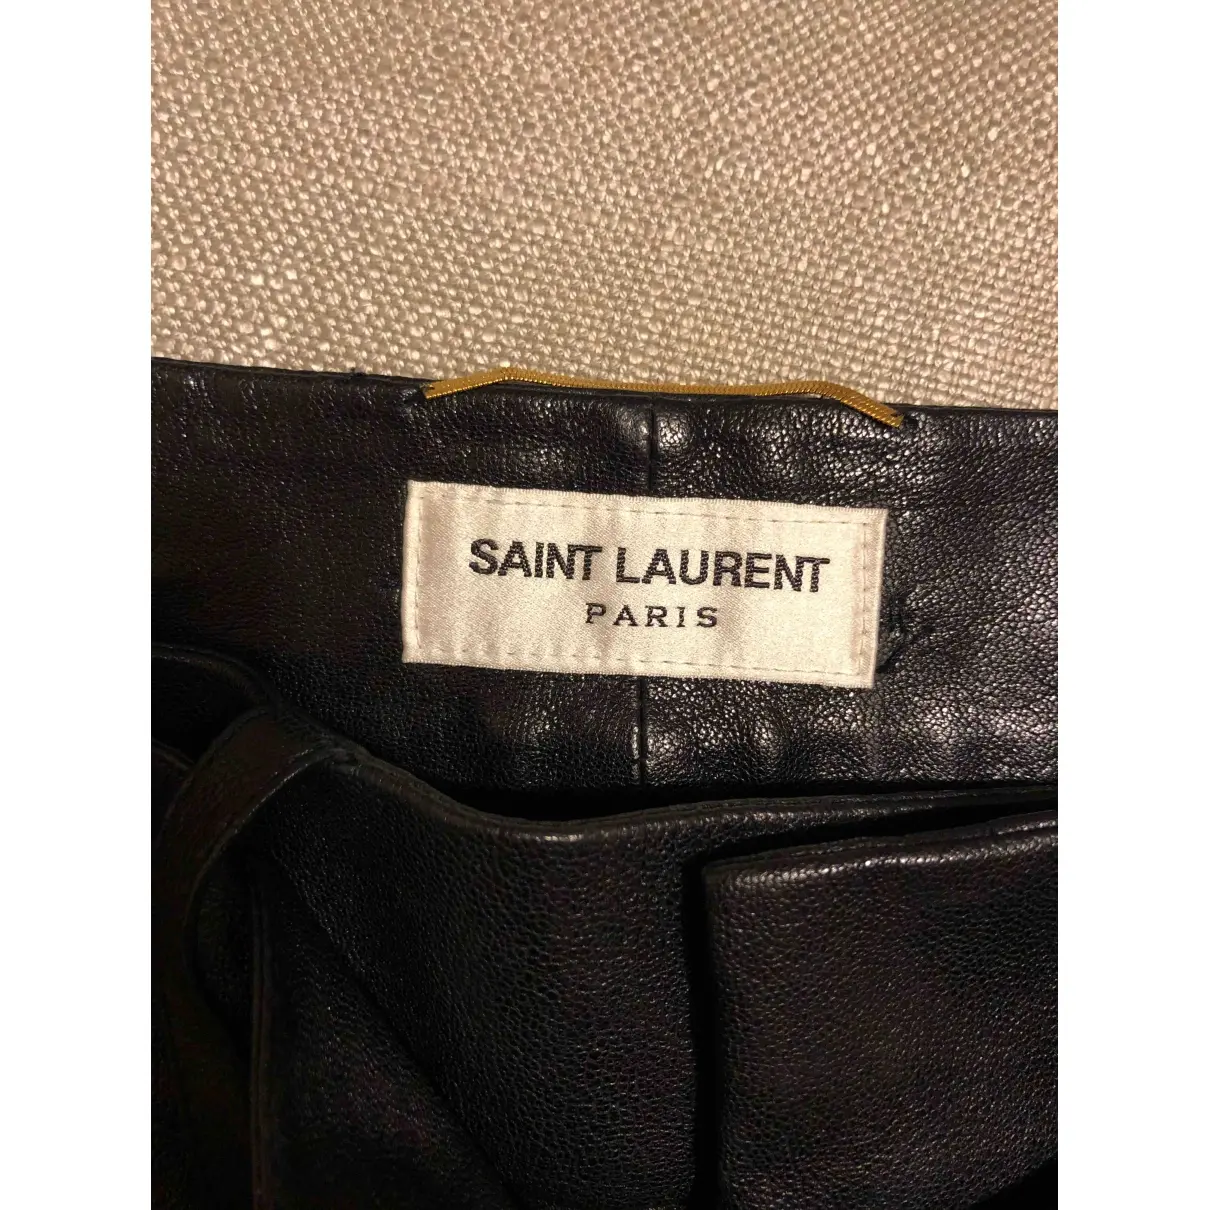 Buy Saint Laurent Leather bermuda online